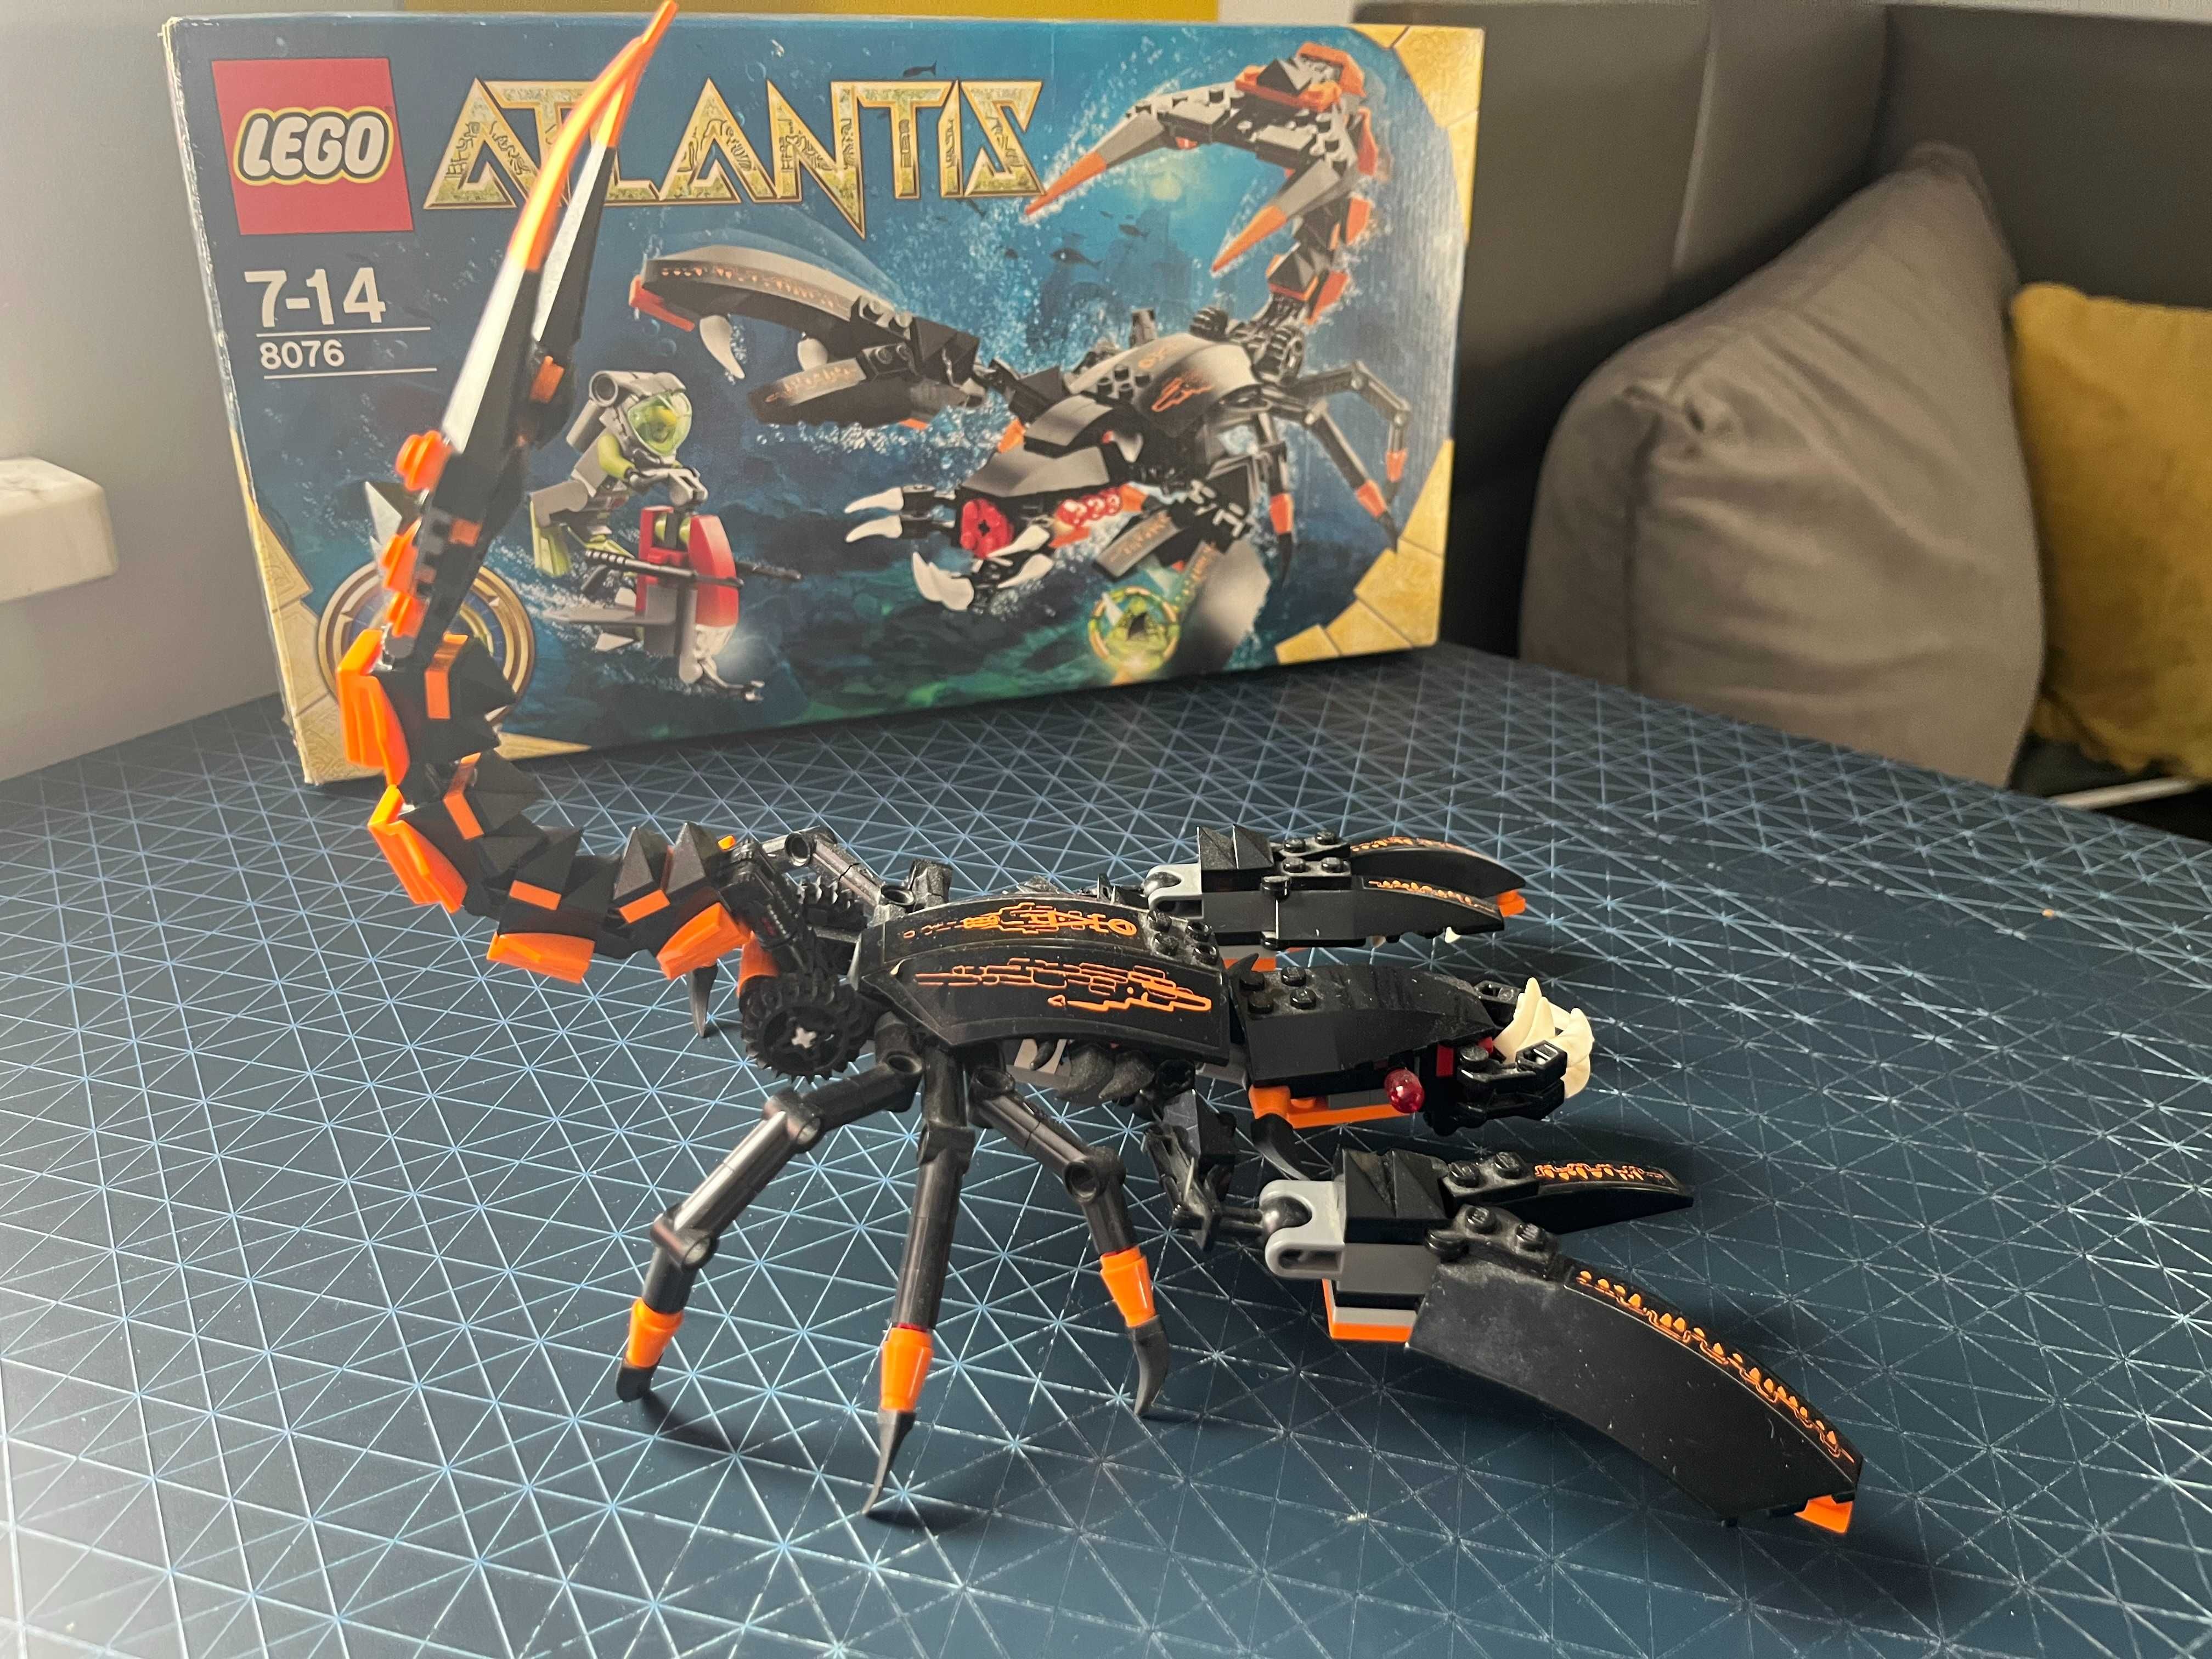 LEGO 8076 Atlantis